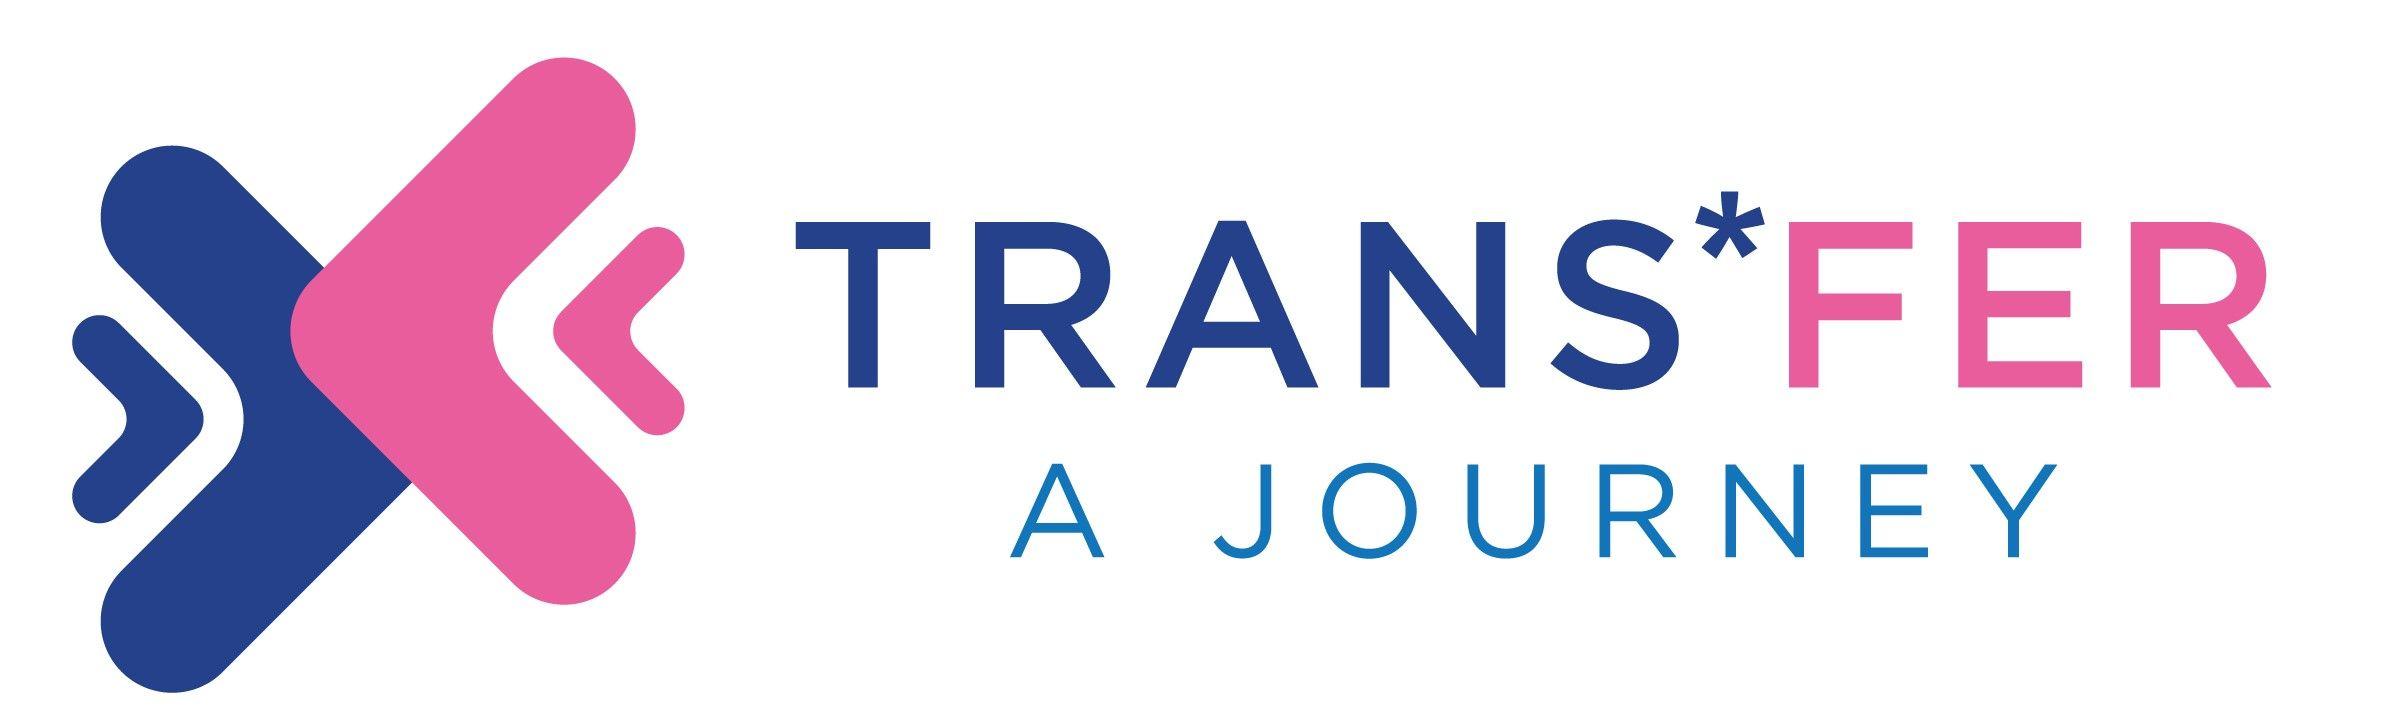 Transfer Logo - Transfer Logo 2018 - Beyond The Box